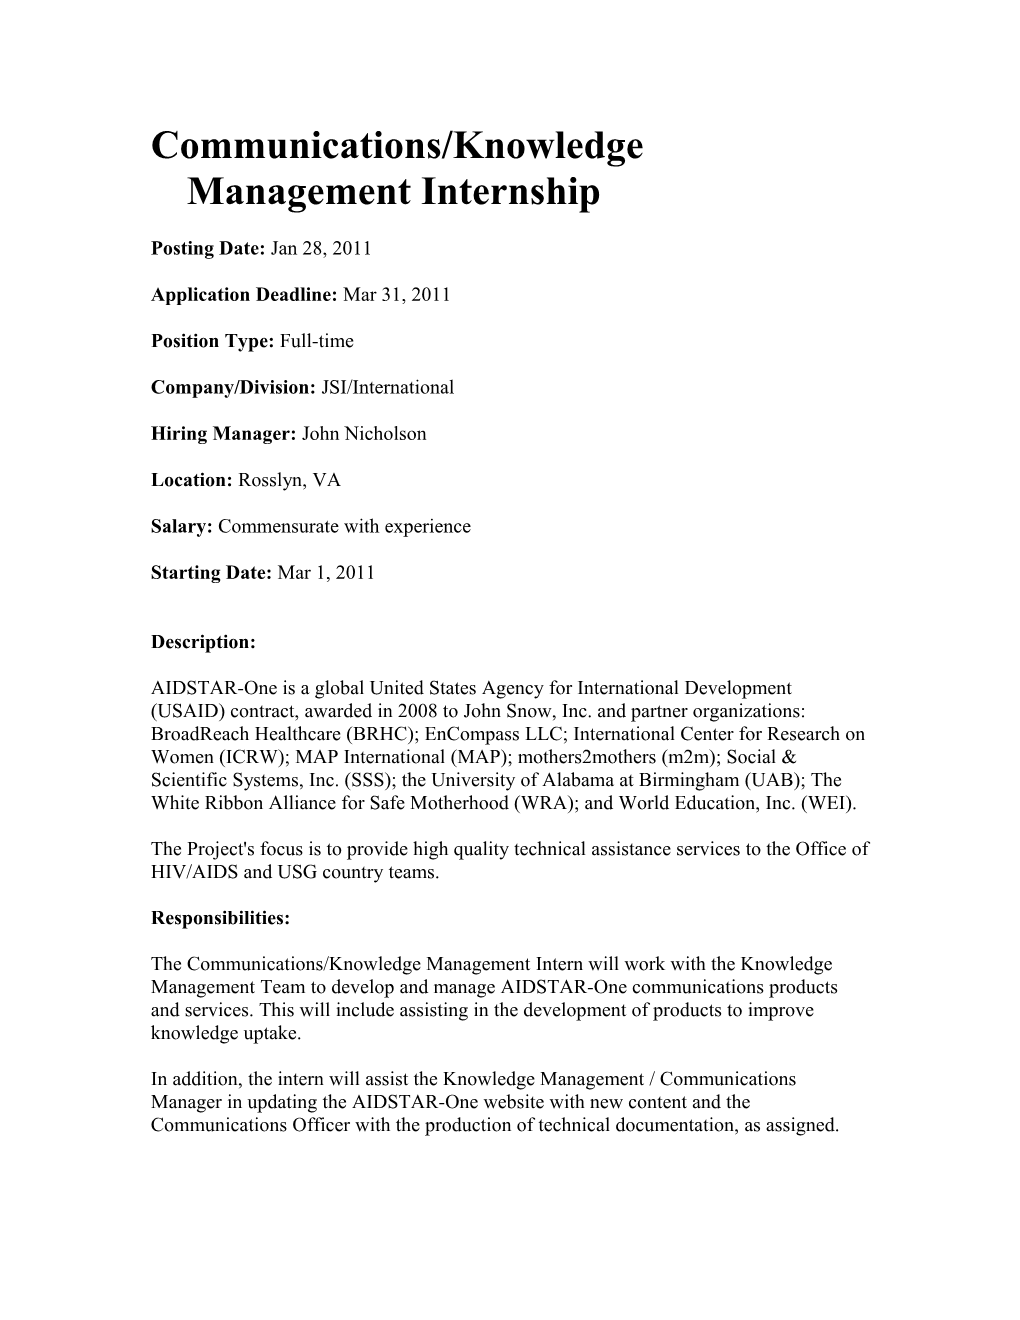 Communications/Knowledge Management Internship